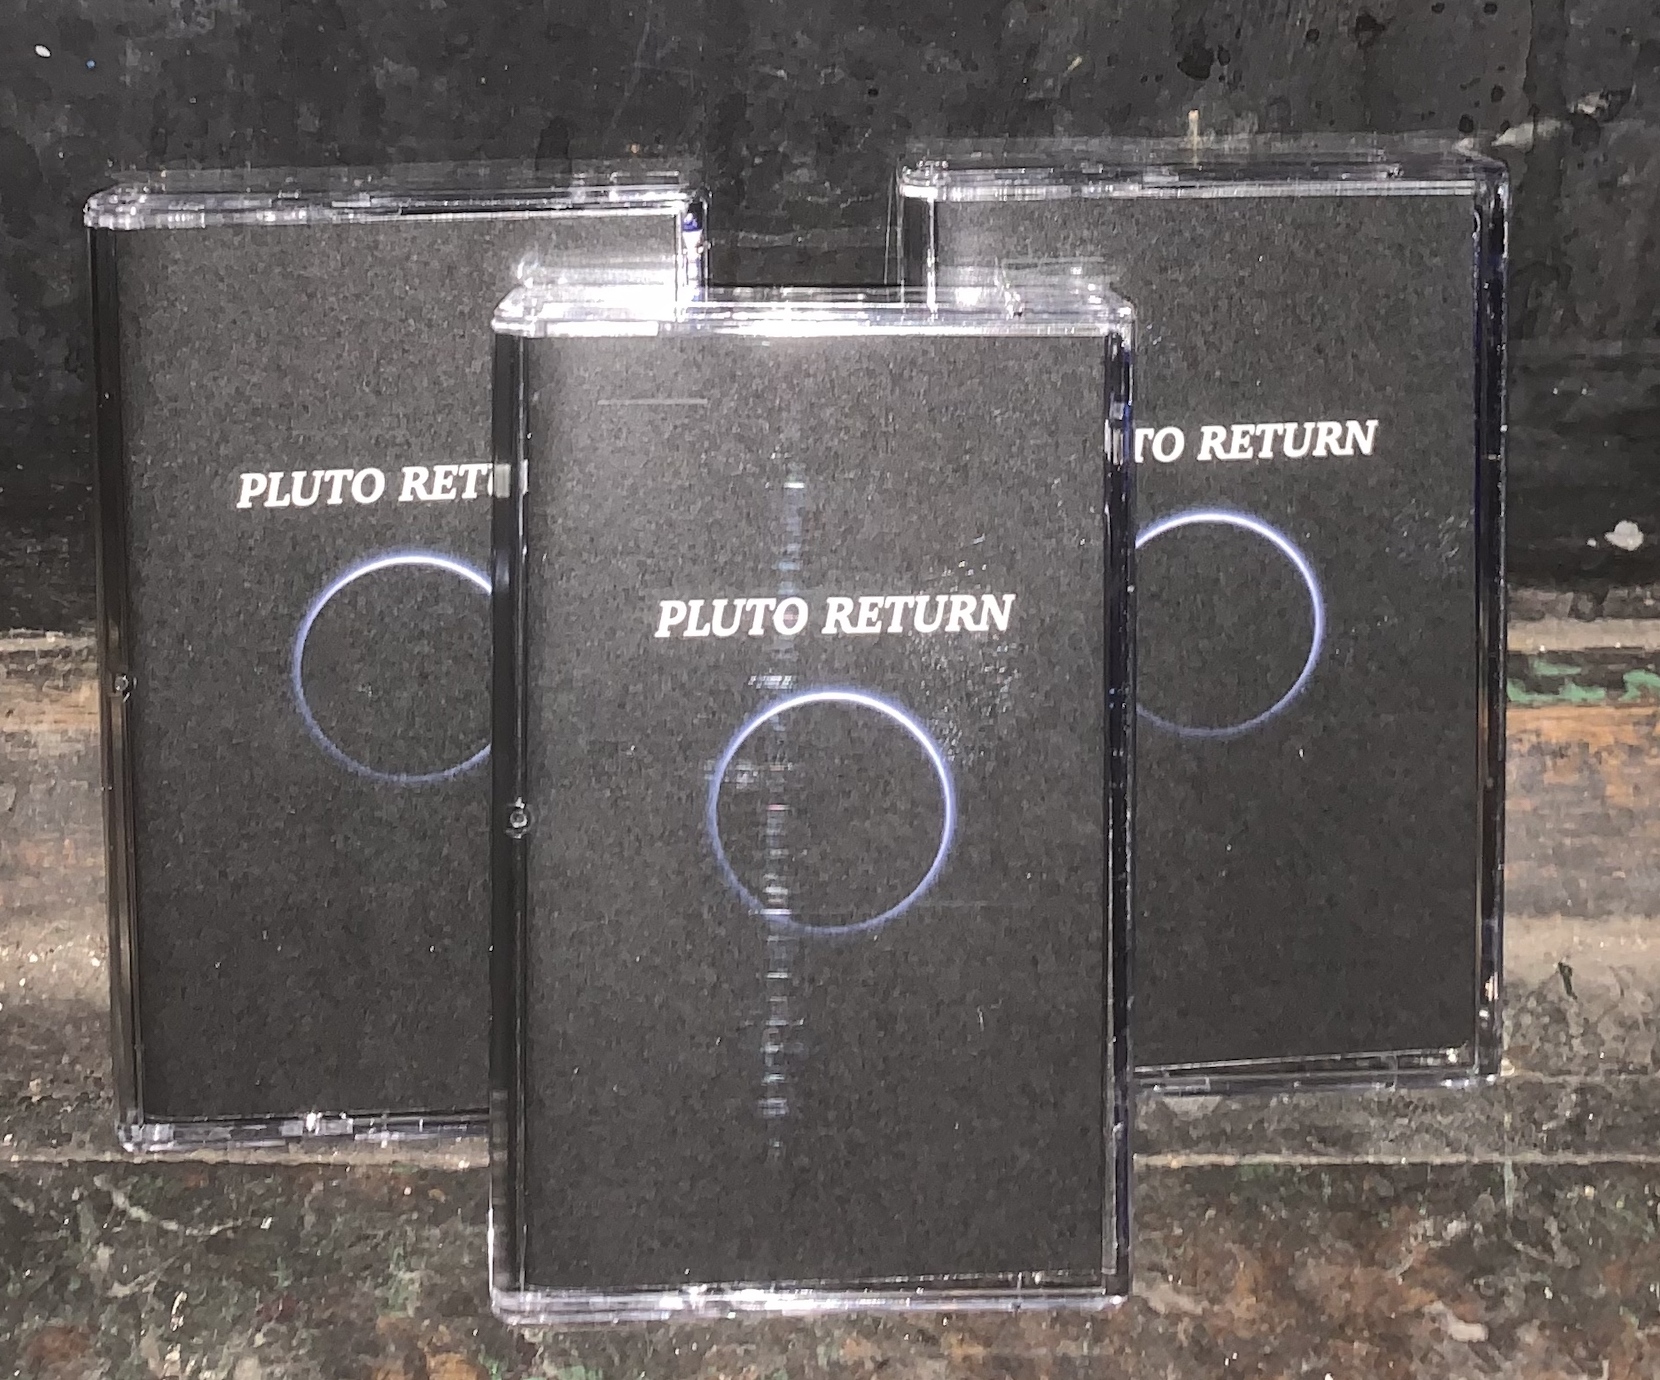 500club - Pluto Return (KSX Solutions)